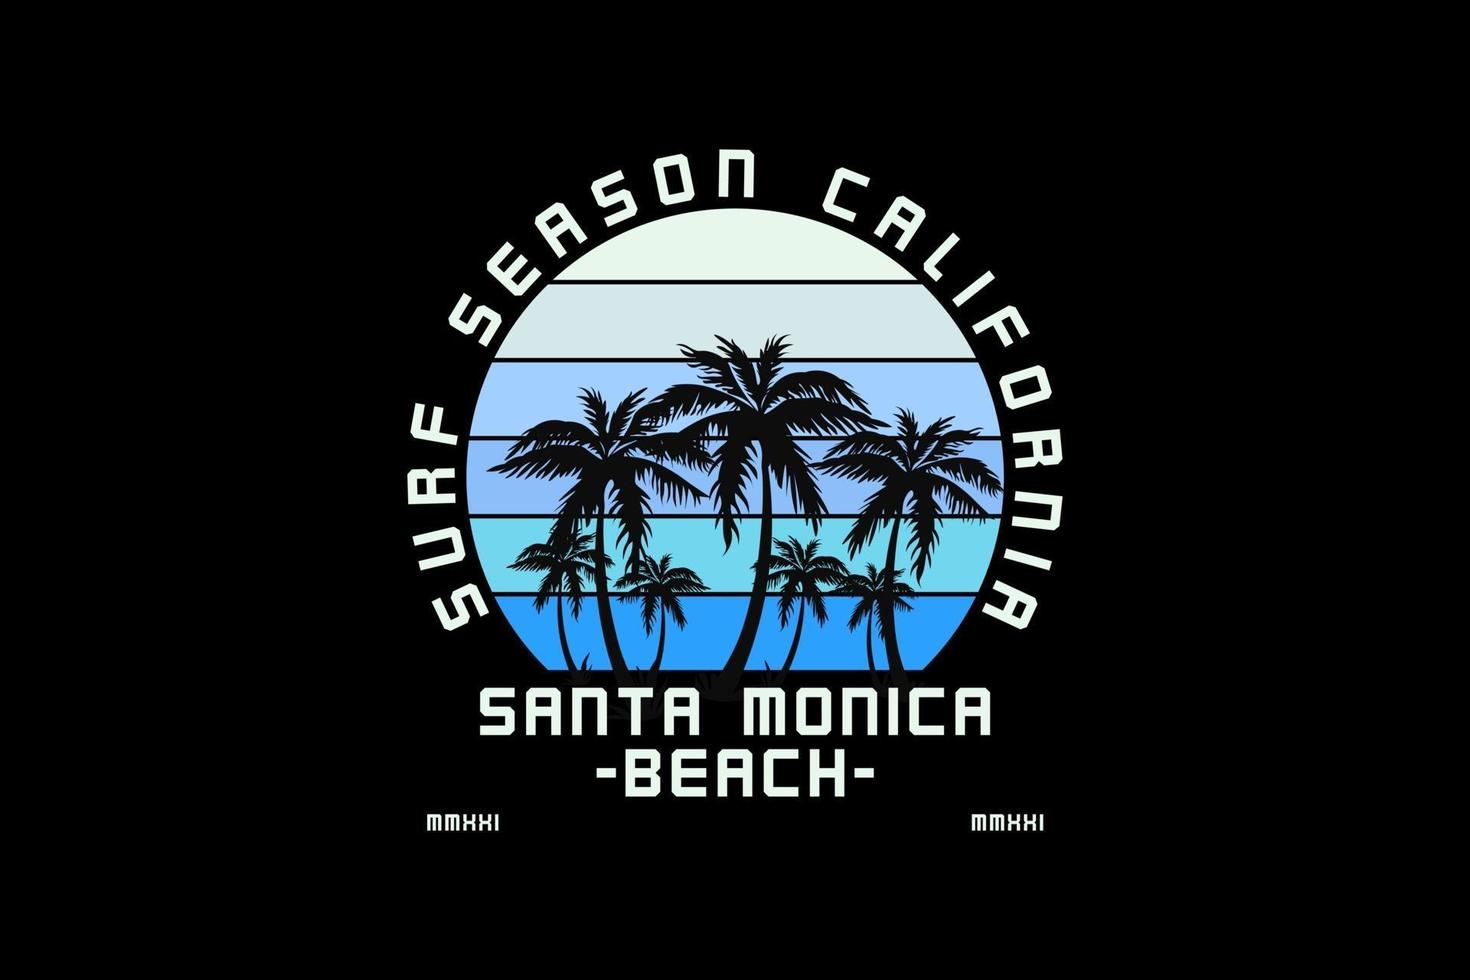 17.surf season california, silhouette retrò in stile vintage vettore